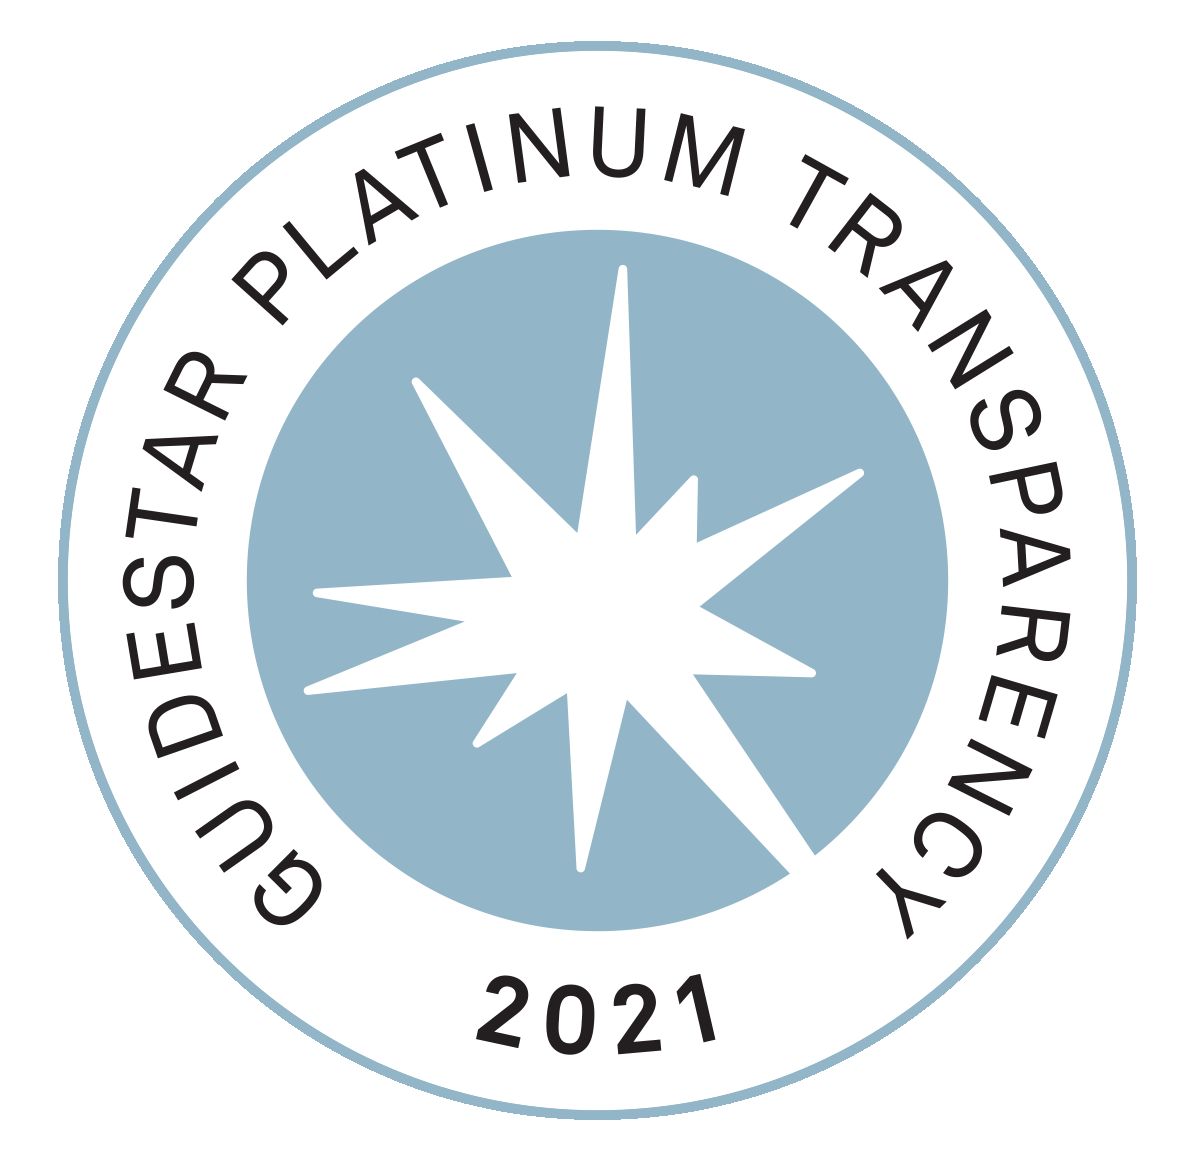 Guidestar Platinum Seal of Transparency 2021